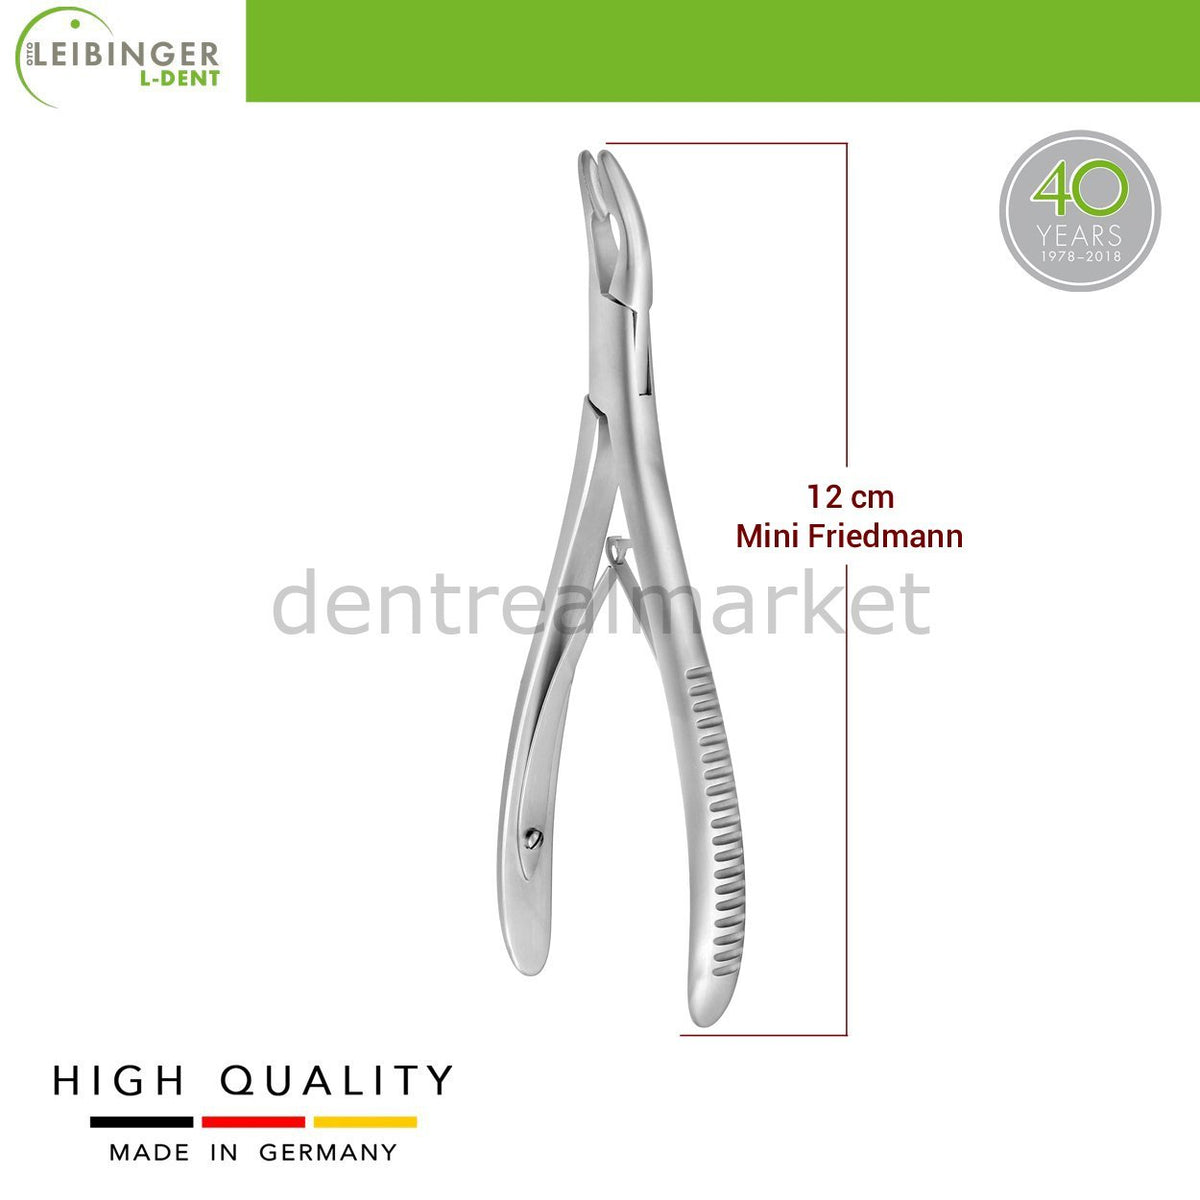 DentrealStore - Leibinger Mini Friedmann Bone Pliers - Bone Rongeur 12 cm